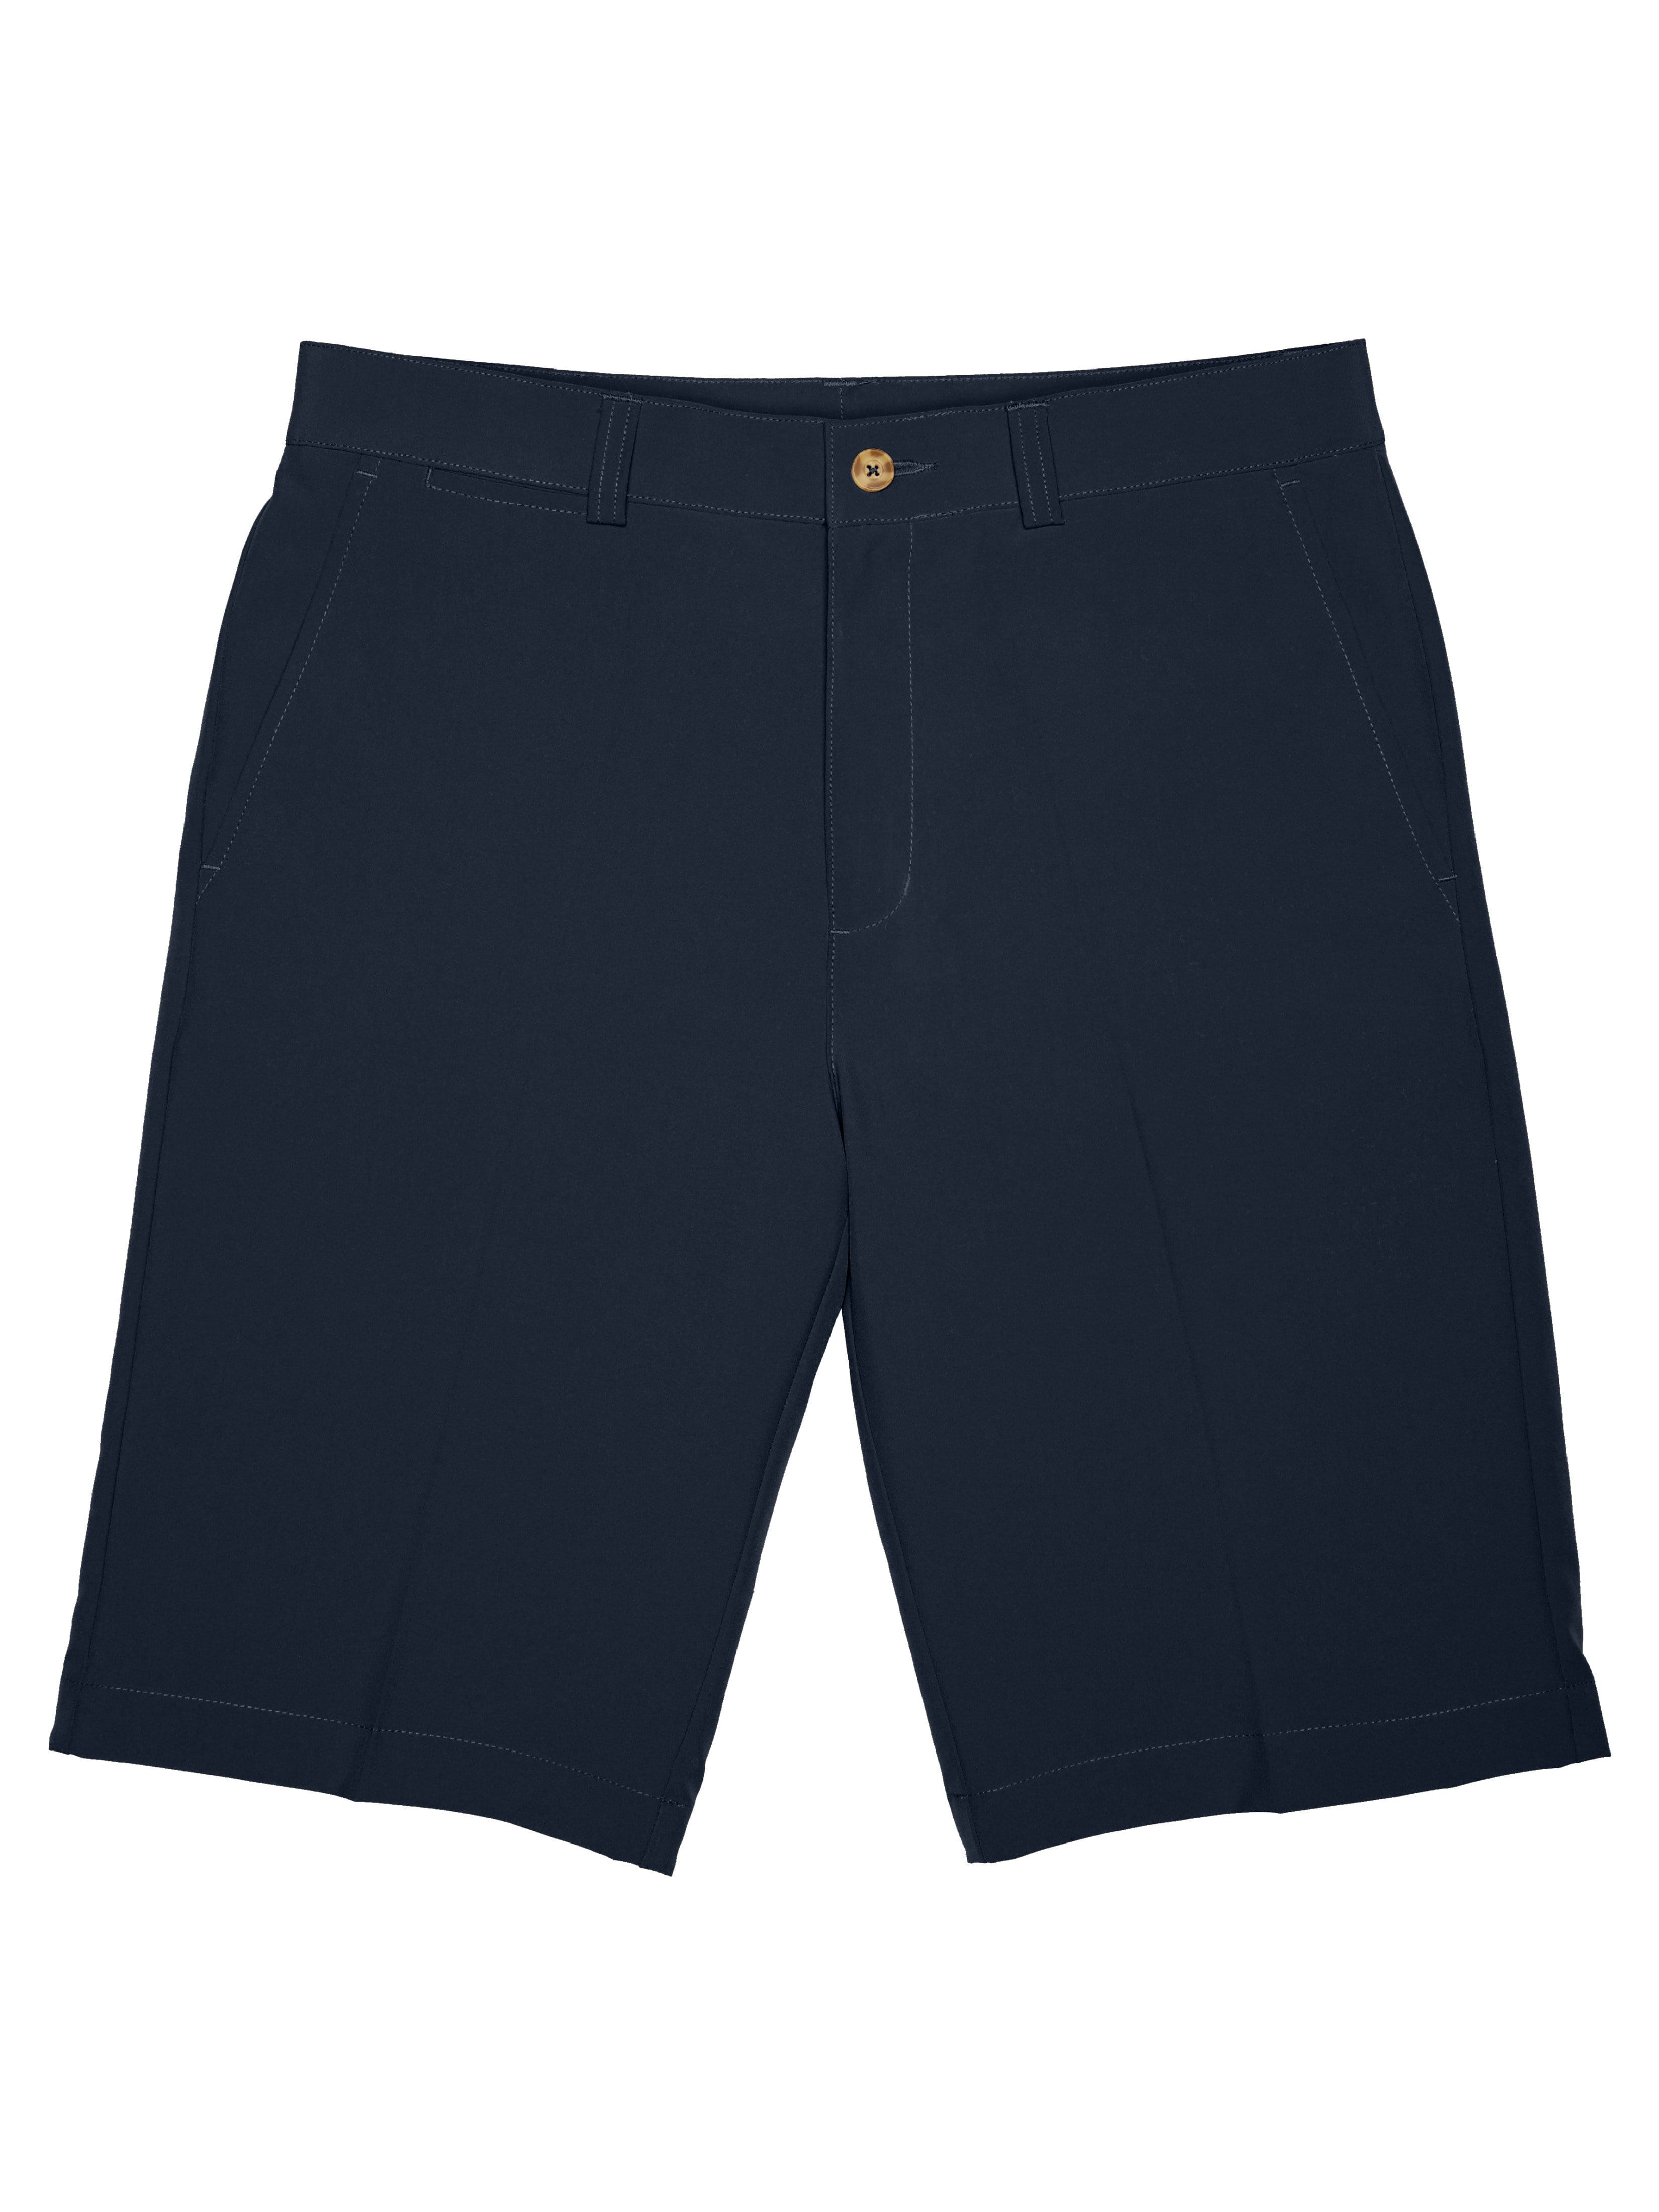 PGA TOUR Apparel Boys Flat Front Solid Golf Shorts, Size Large, Dark Navy Blue, Polyester/Spandex | Golf Apparel Shop